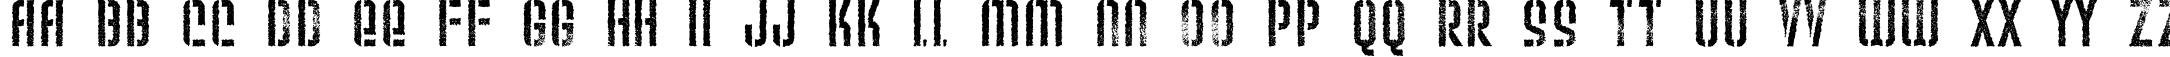 Пример написания английского алфавита шрифтом Weltron Urban